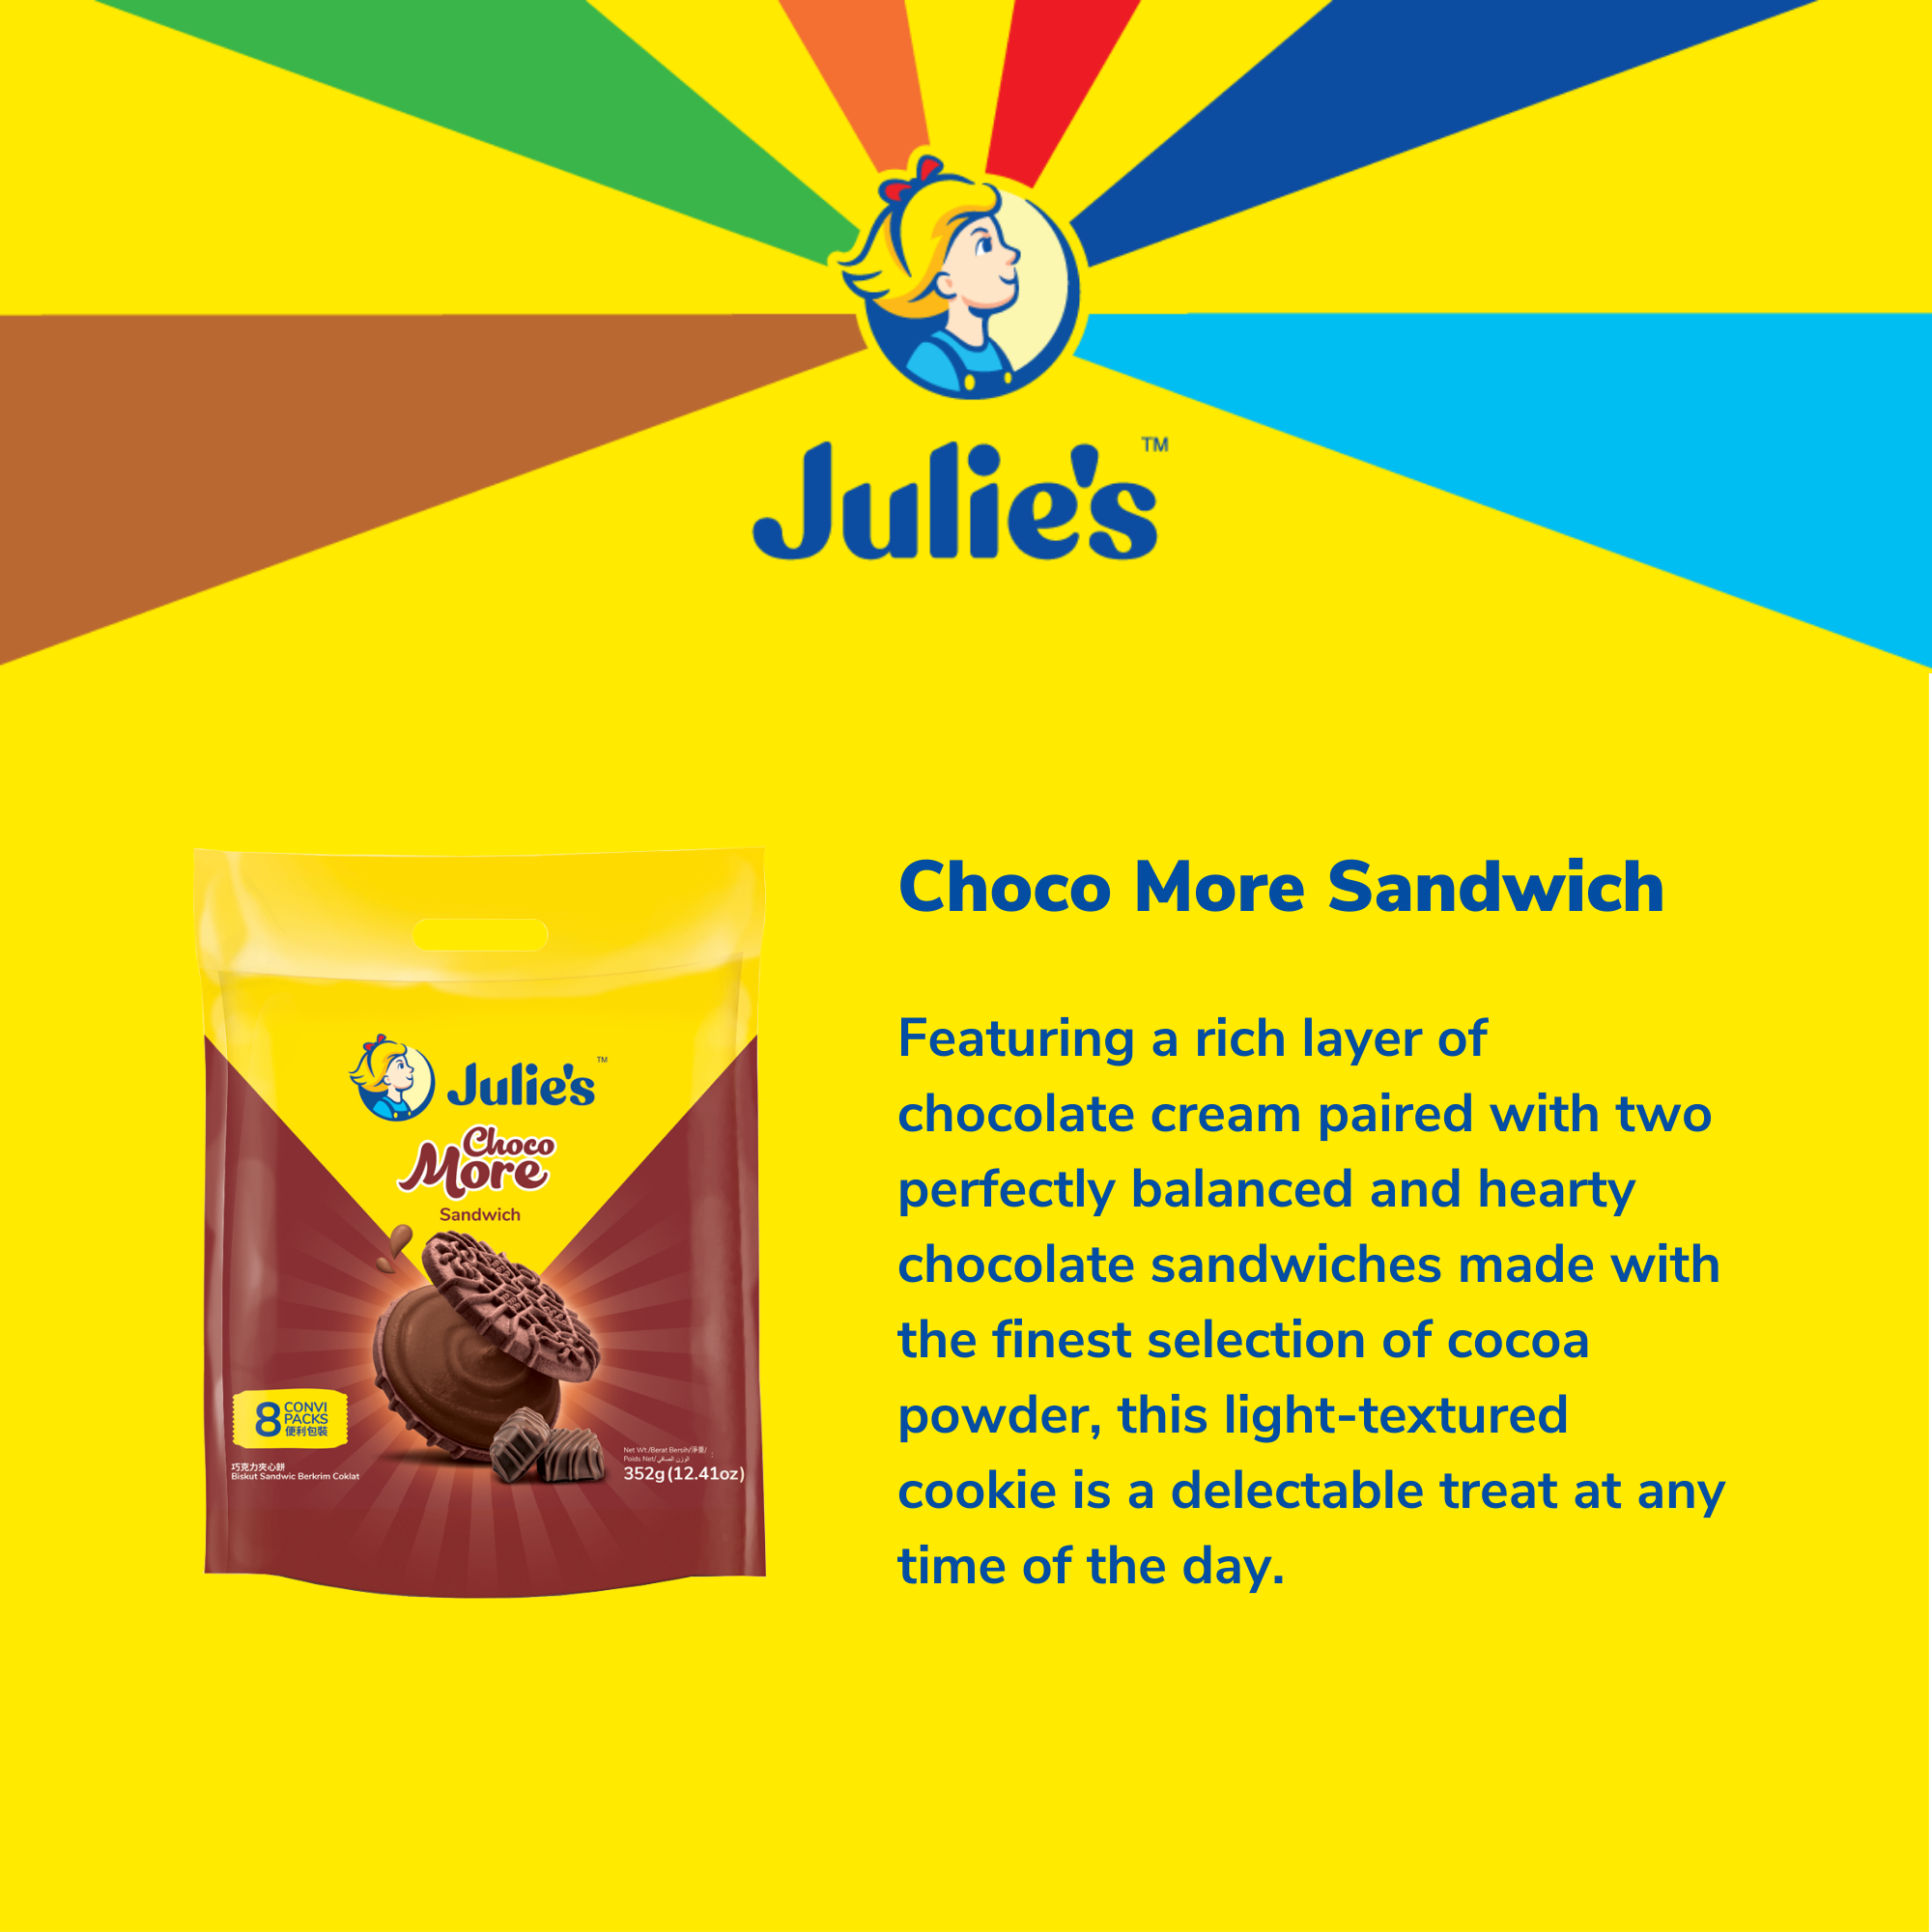 Julie's Choco More Sandwich 352g x 1 pack